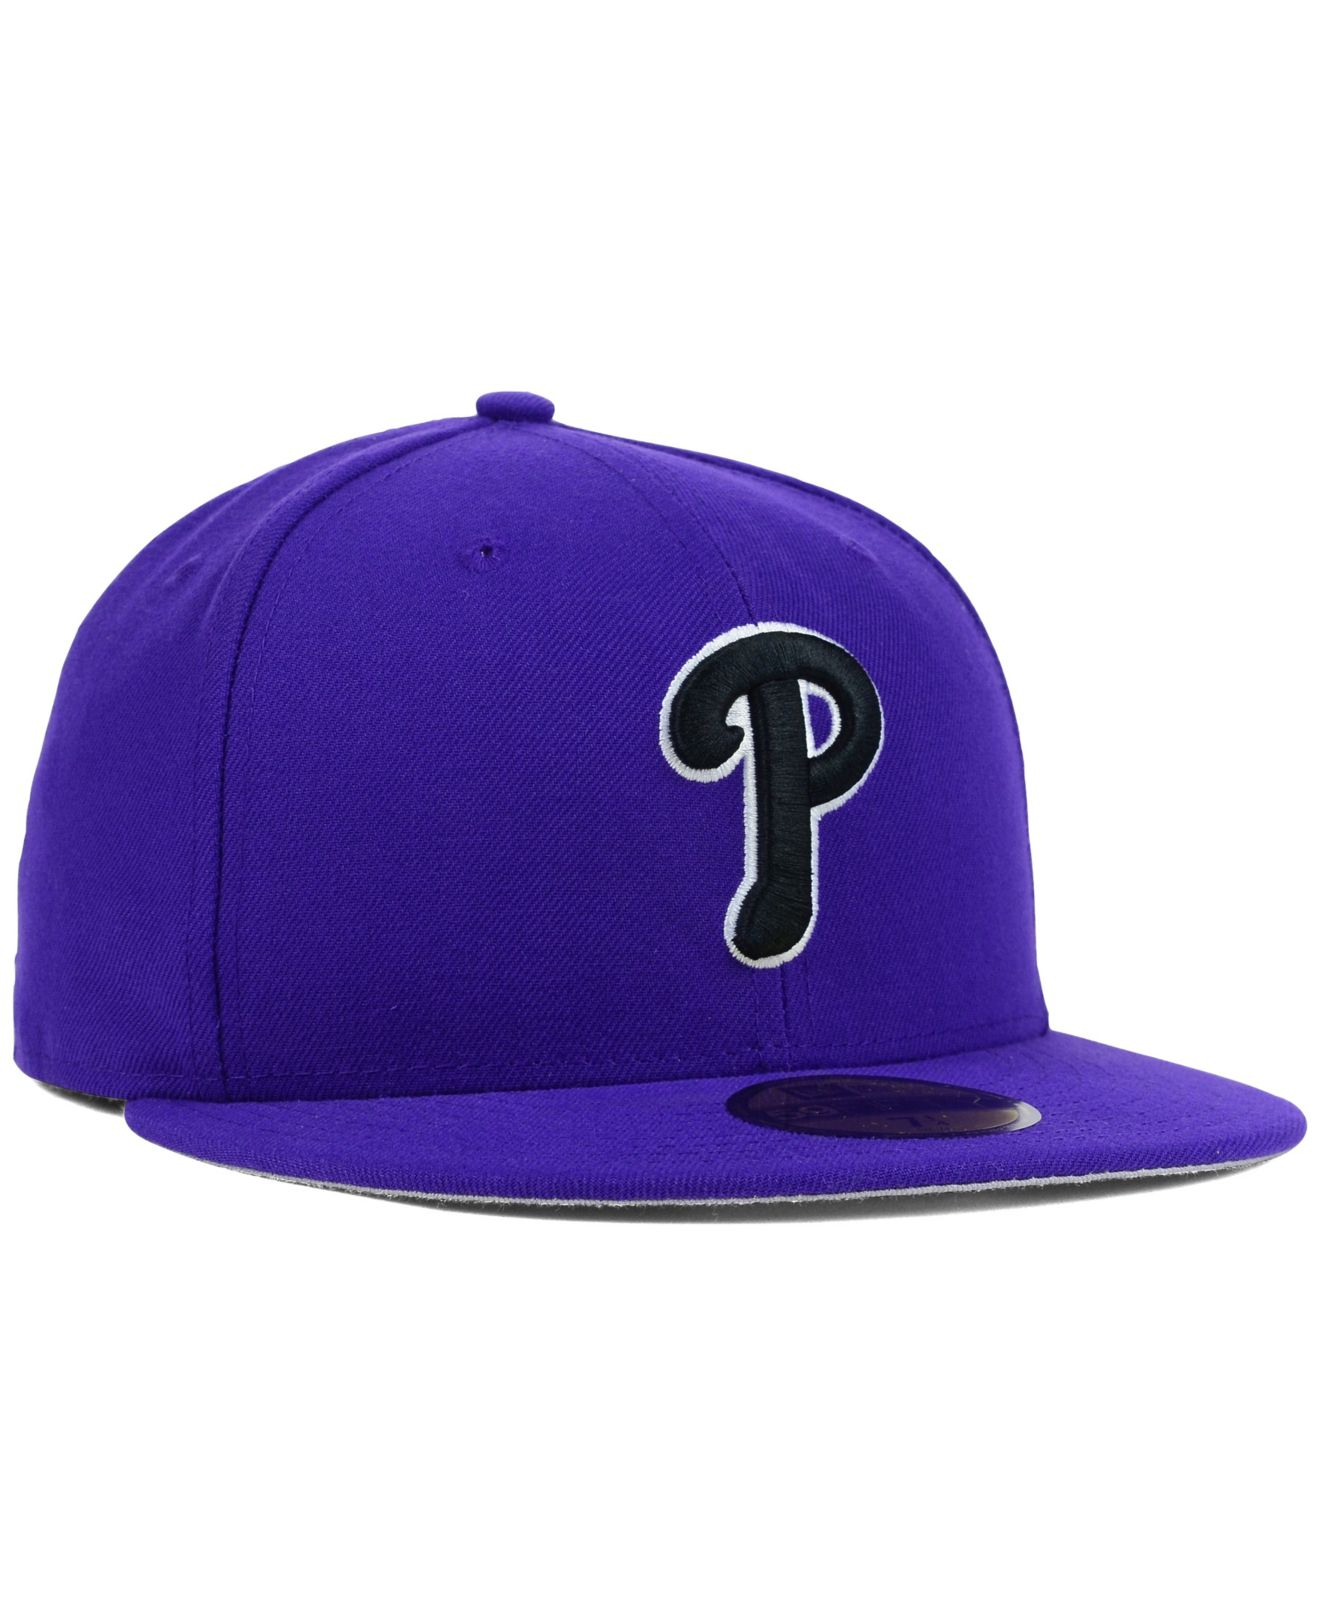 Official New Era Arizona Diamondbacks MLB Blooming Purple 59FIFTY Fitted Cap  B4989250 B4989250  New Era Cap Norway